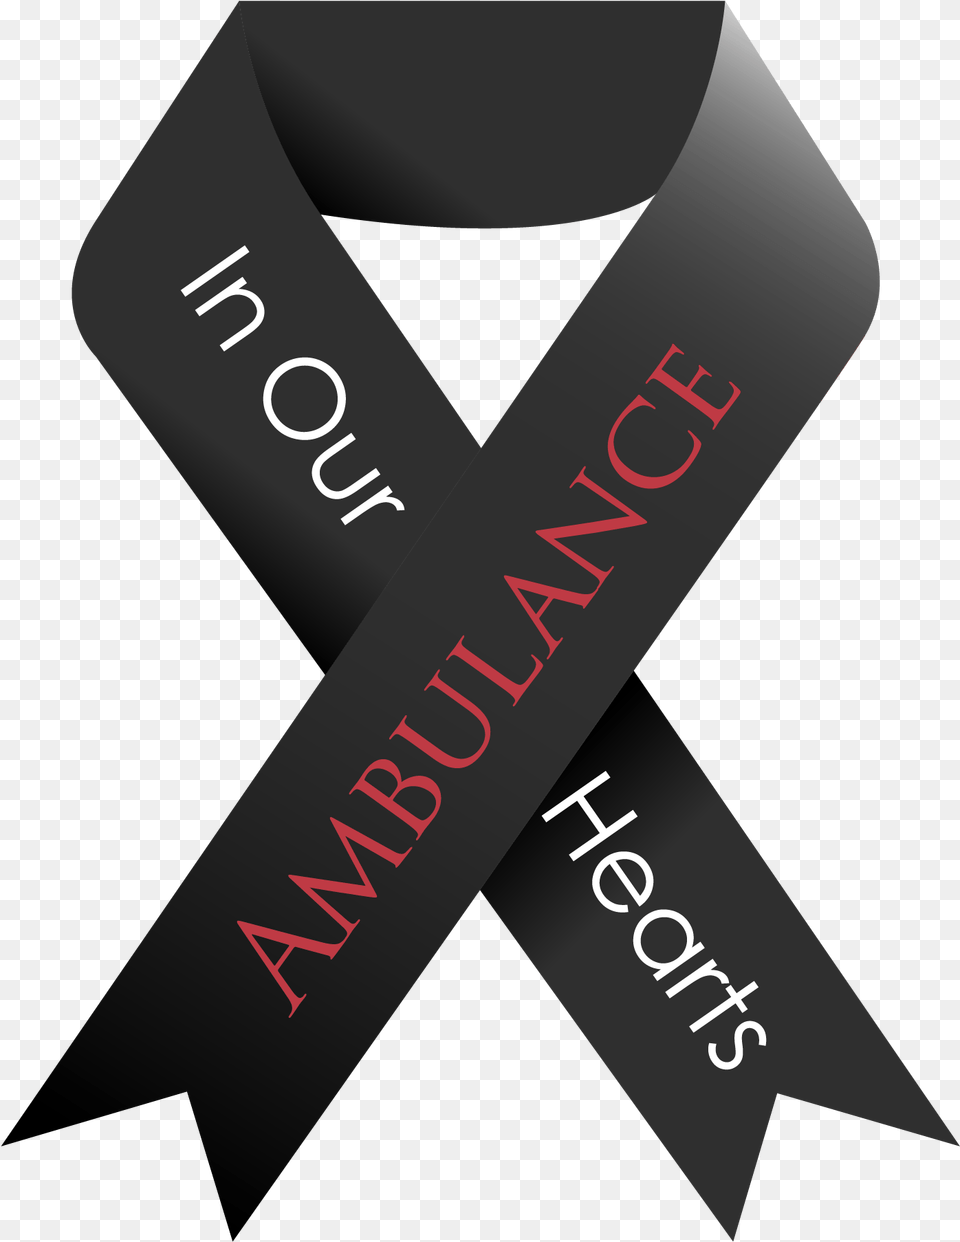 In Our Hearts Black Ambulance Ribbon Ambulance Black Ribbon, Sash Free Transparent Png